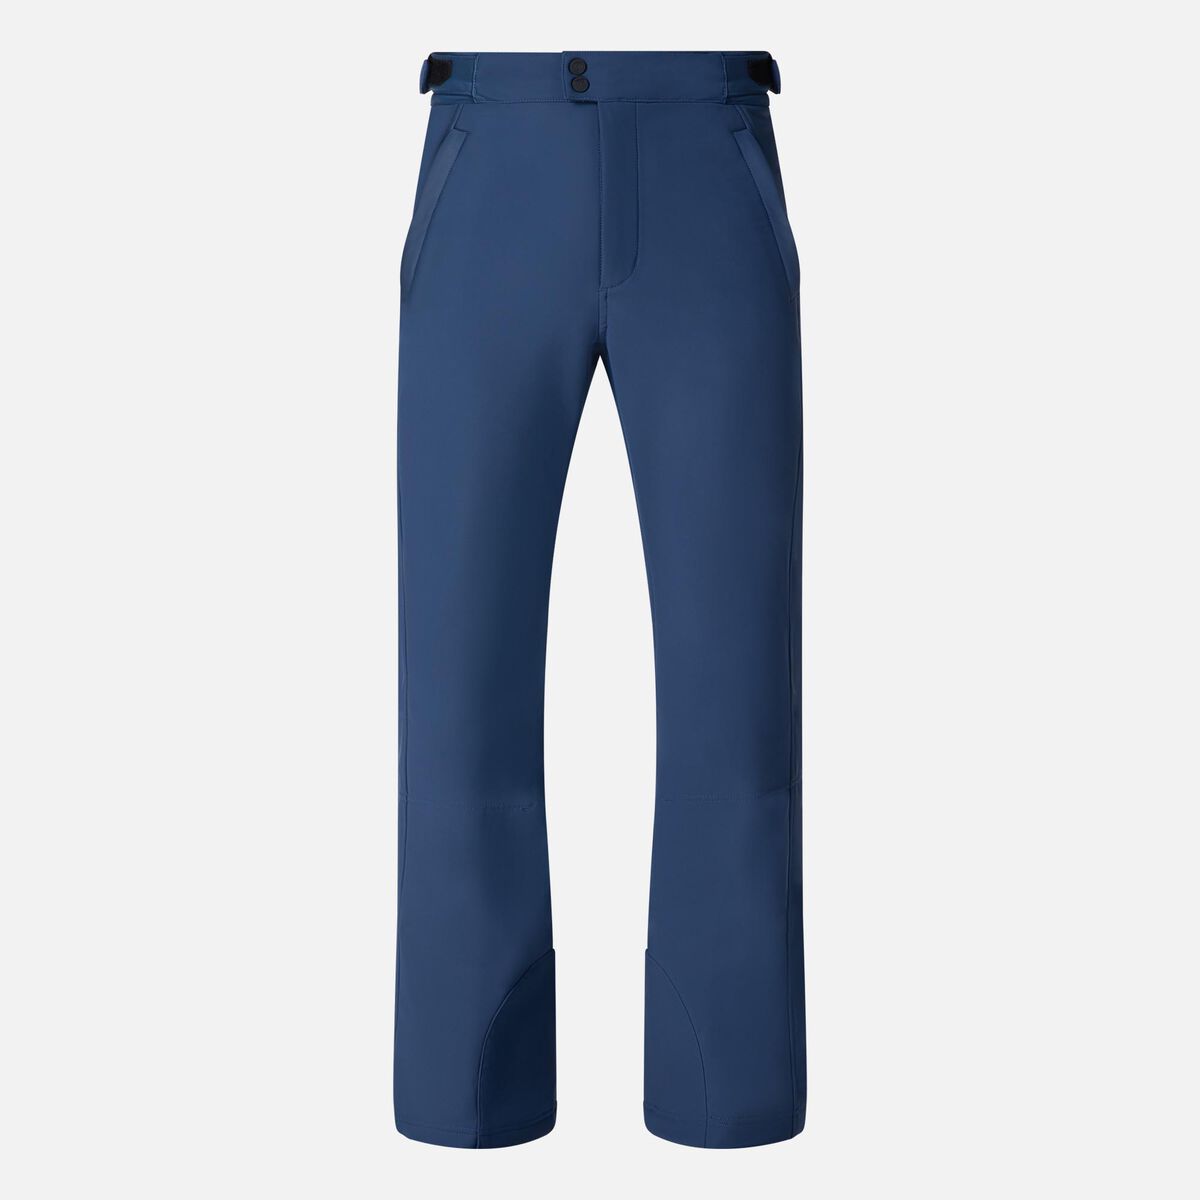 Rossignol Men's Origin Soft Shell Ski Pants blue